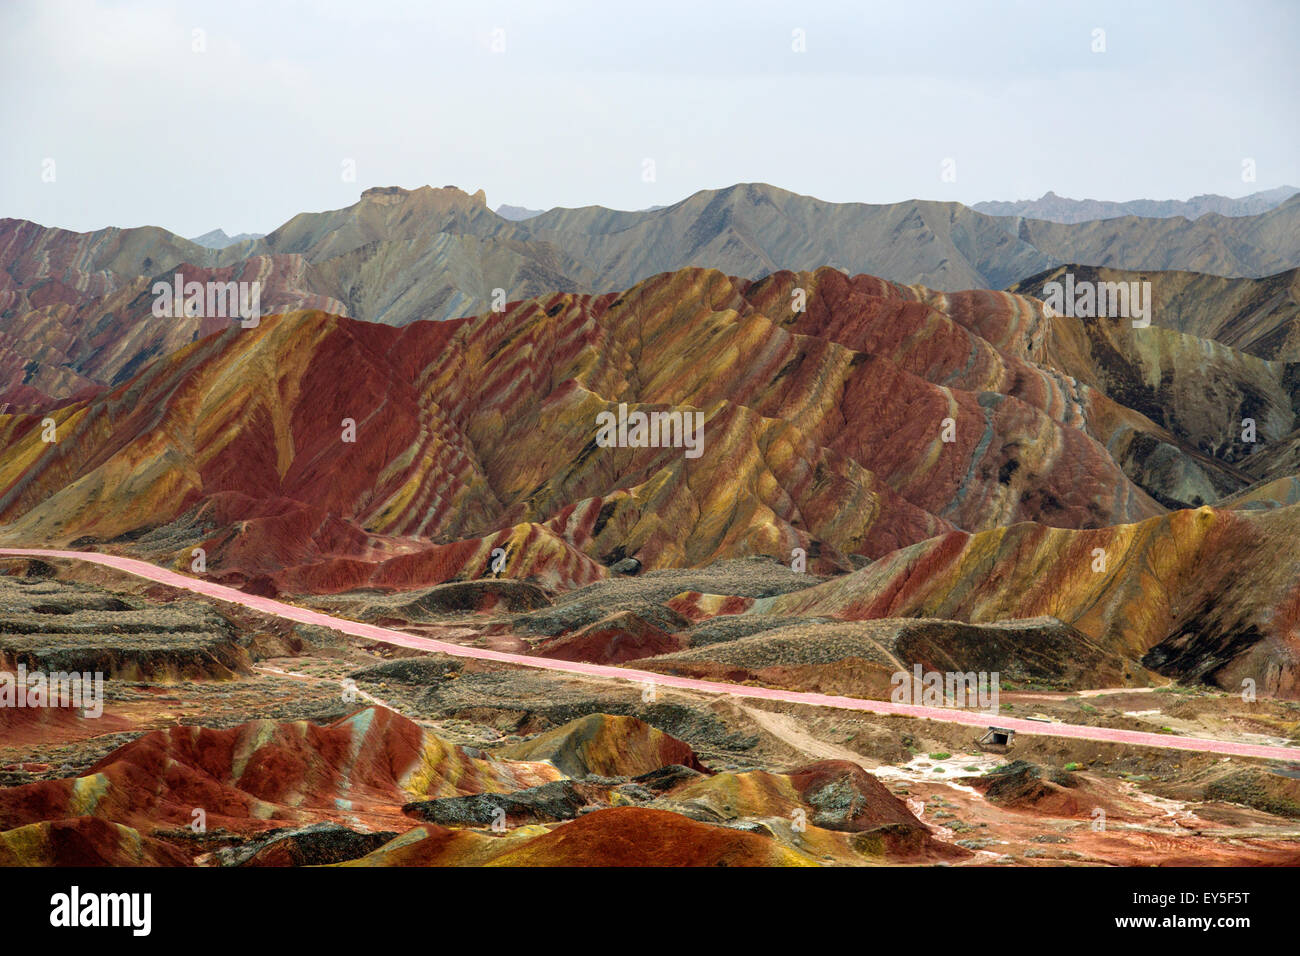 Danxia landform in Zhangye, China Stock Photo